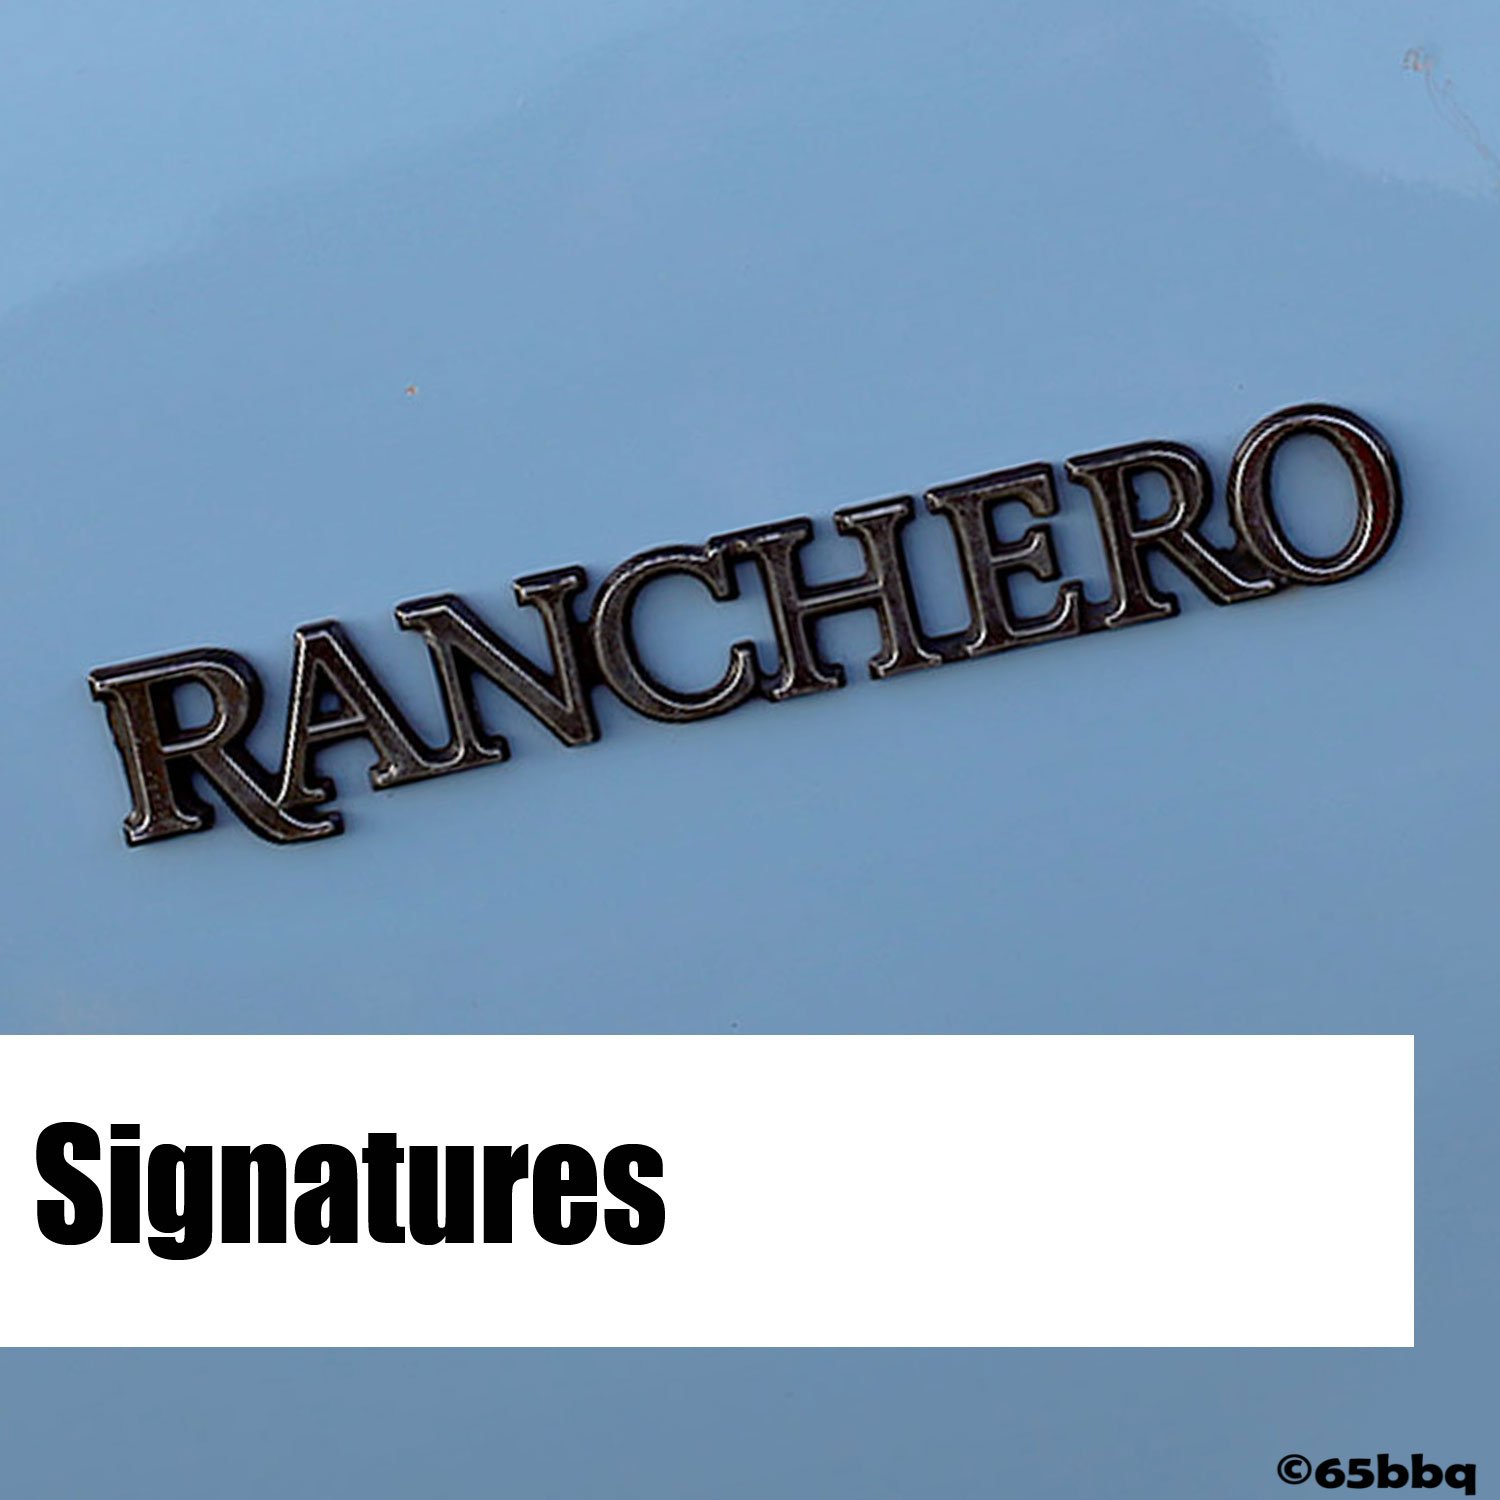 Ford Ranchero Signatures